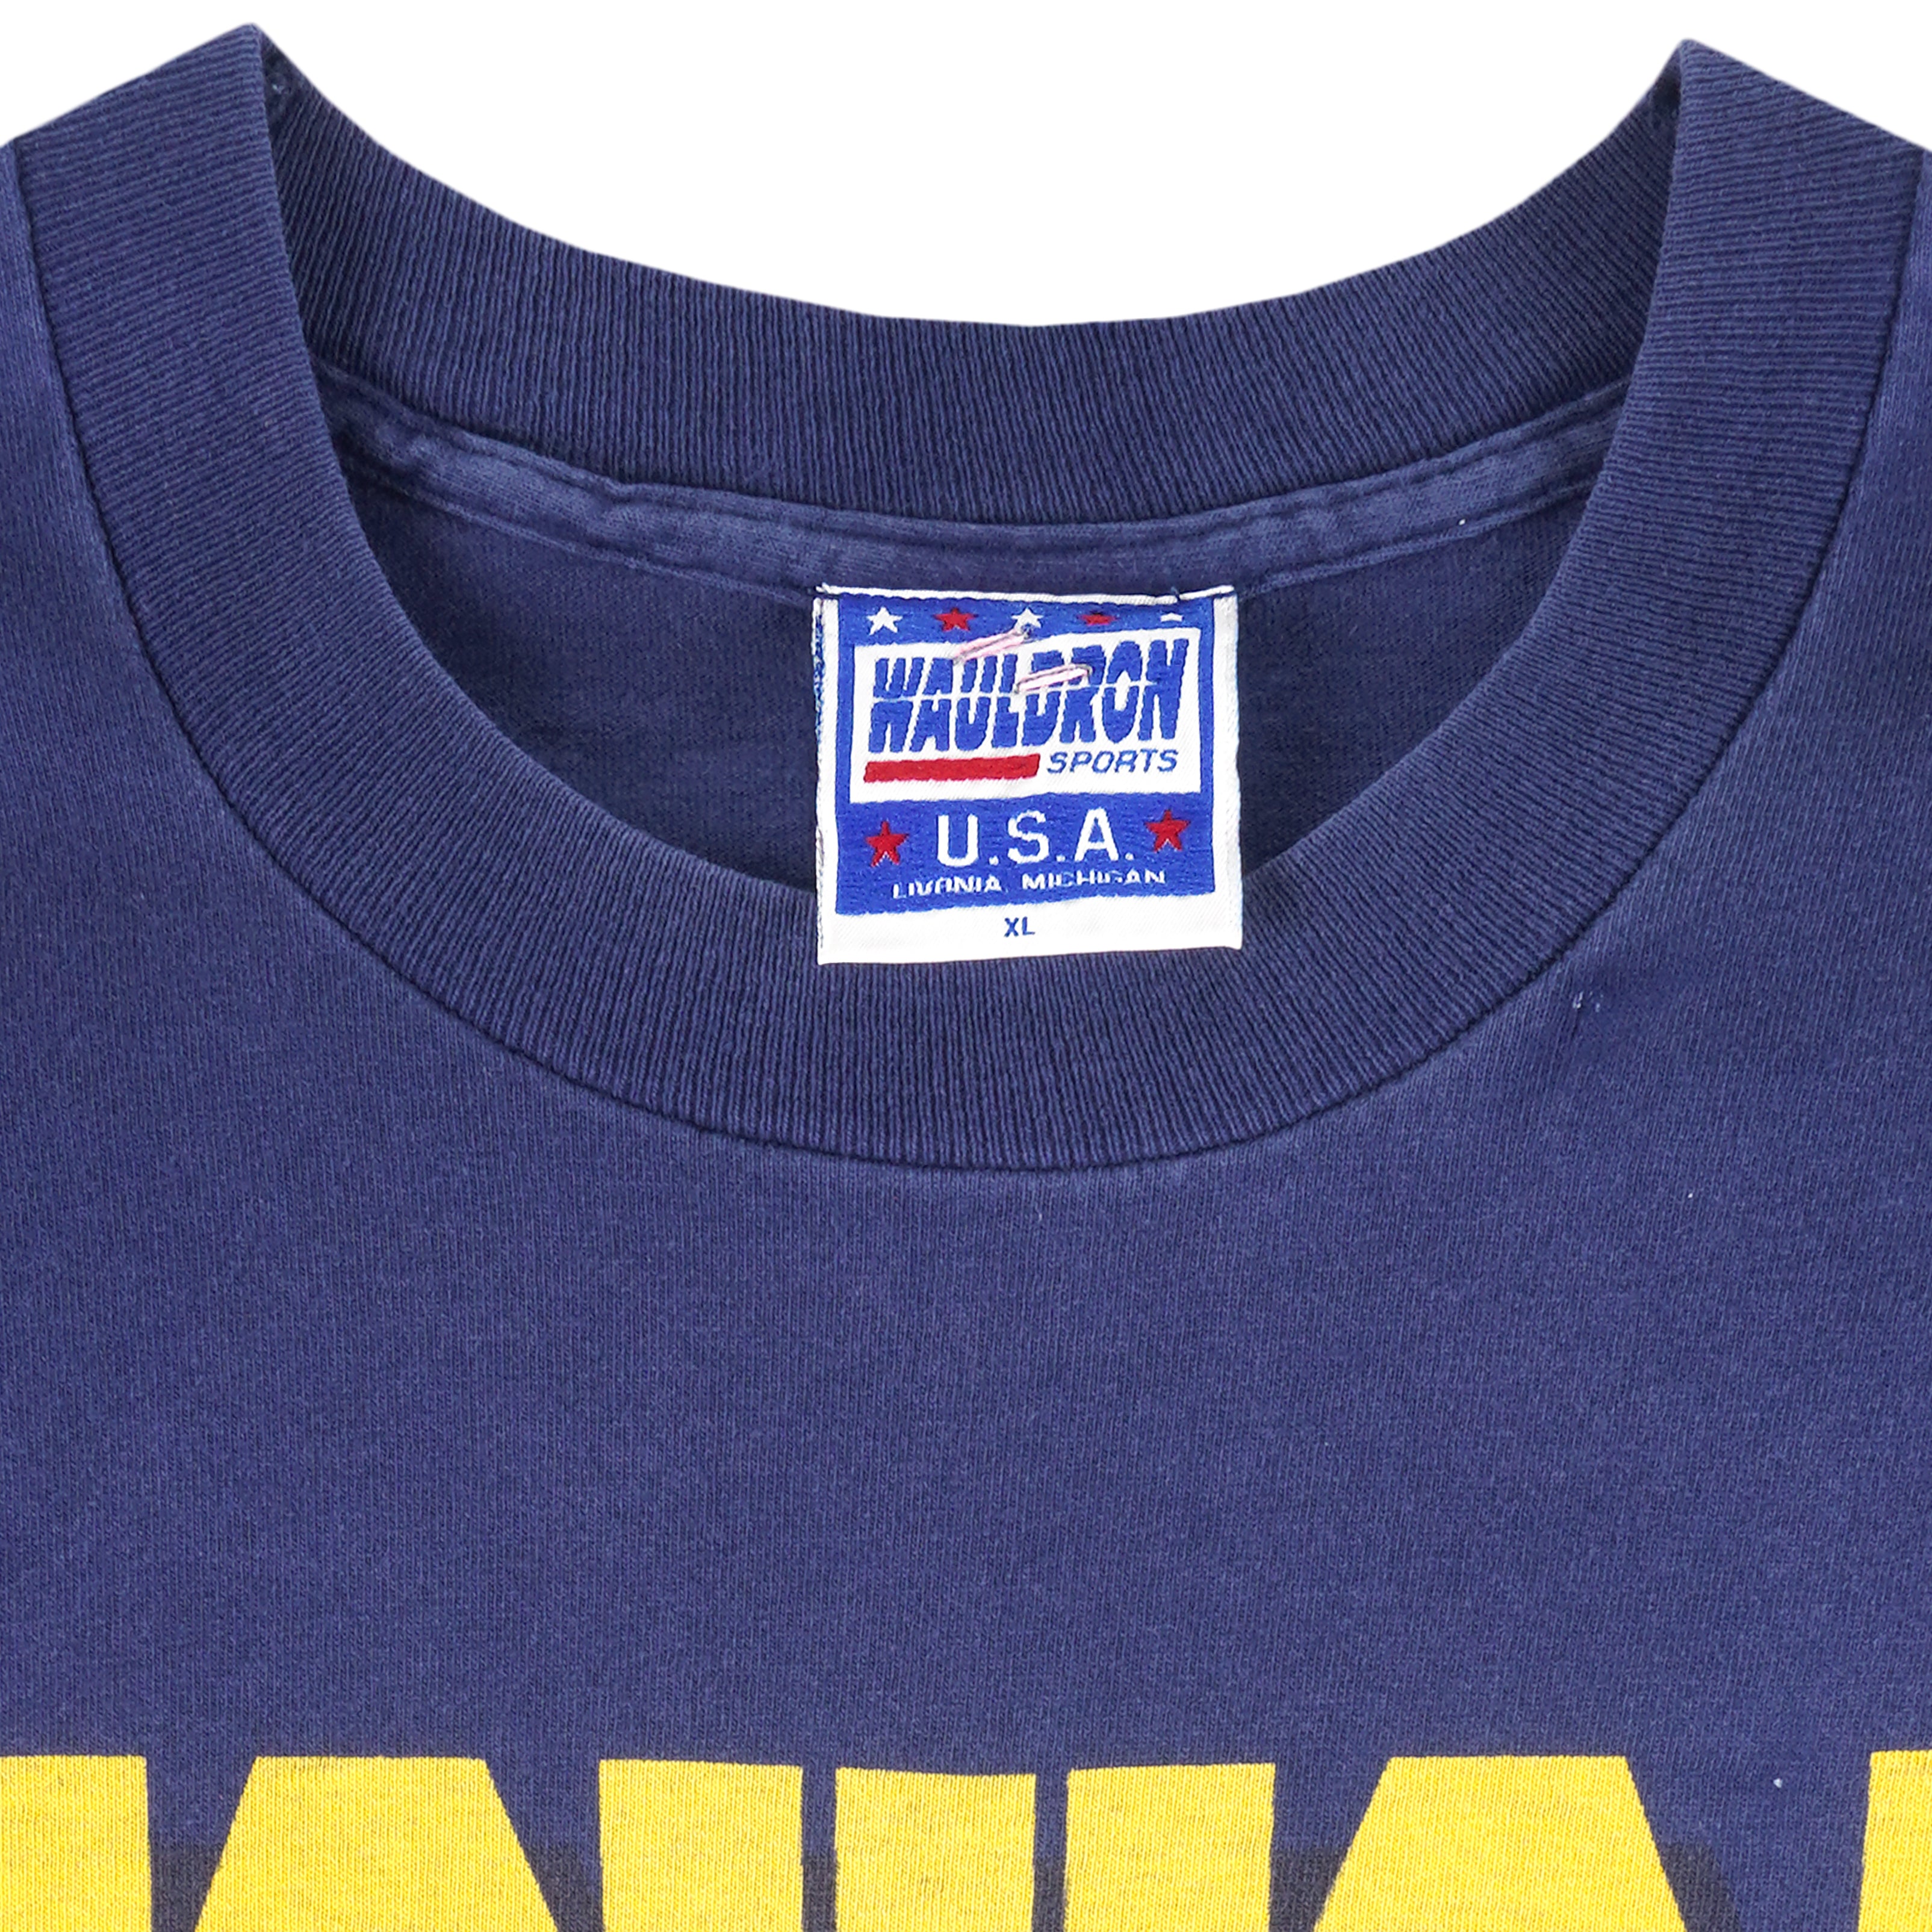 MICHIGAN WOLVERINES Basketball - 1989 NCAA Champions T-Shirt - Large -  VINTAGE!